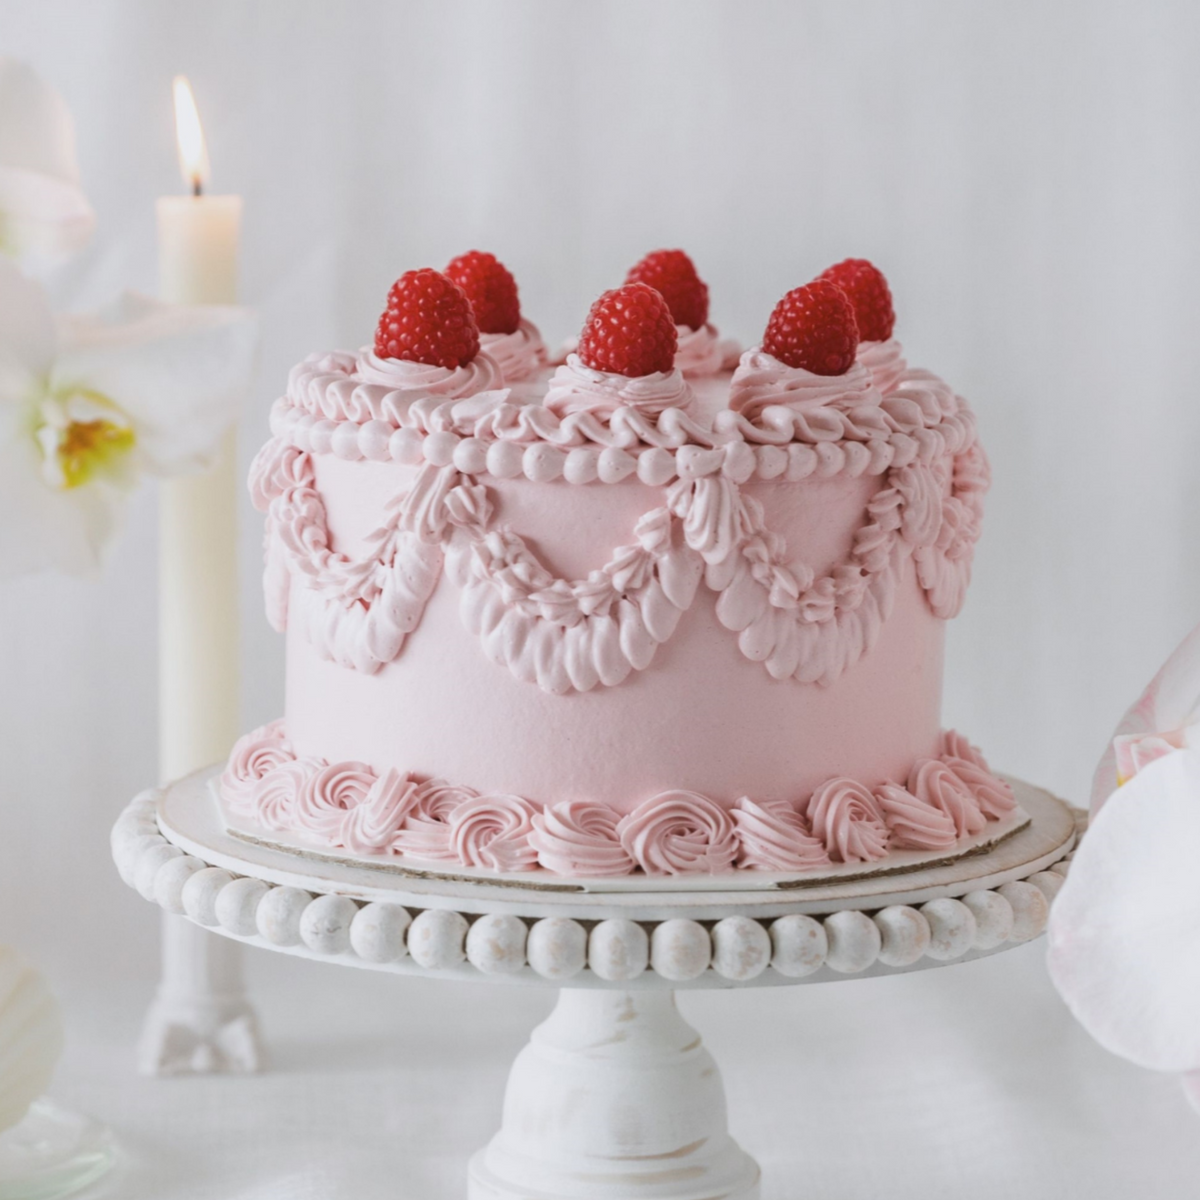 Jeeny's Marie Antoinette mini Bundt cakes: Today